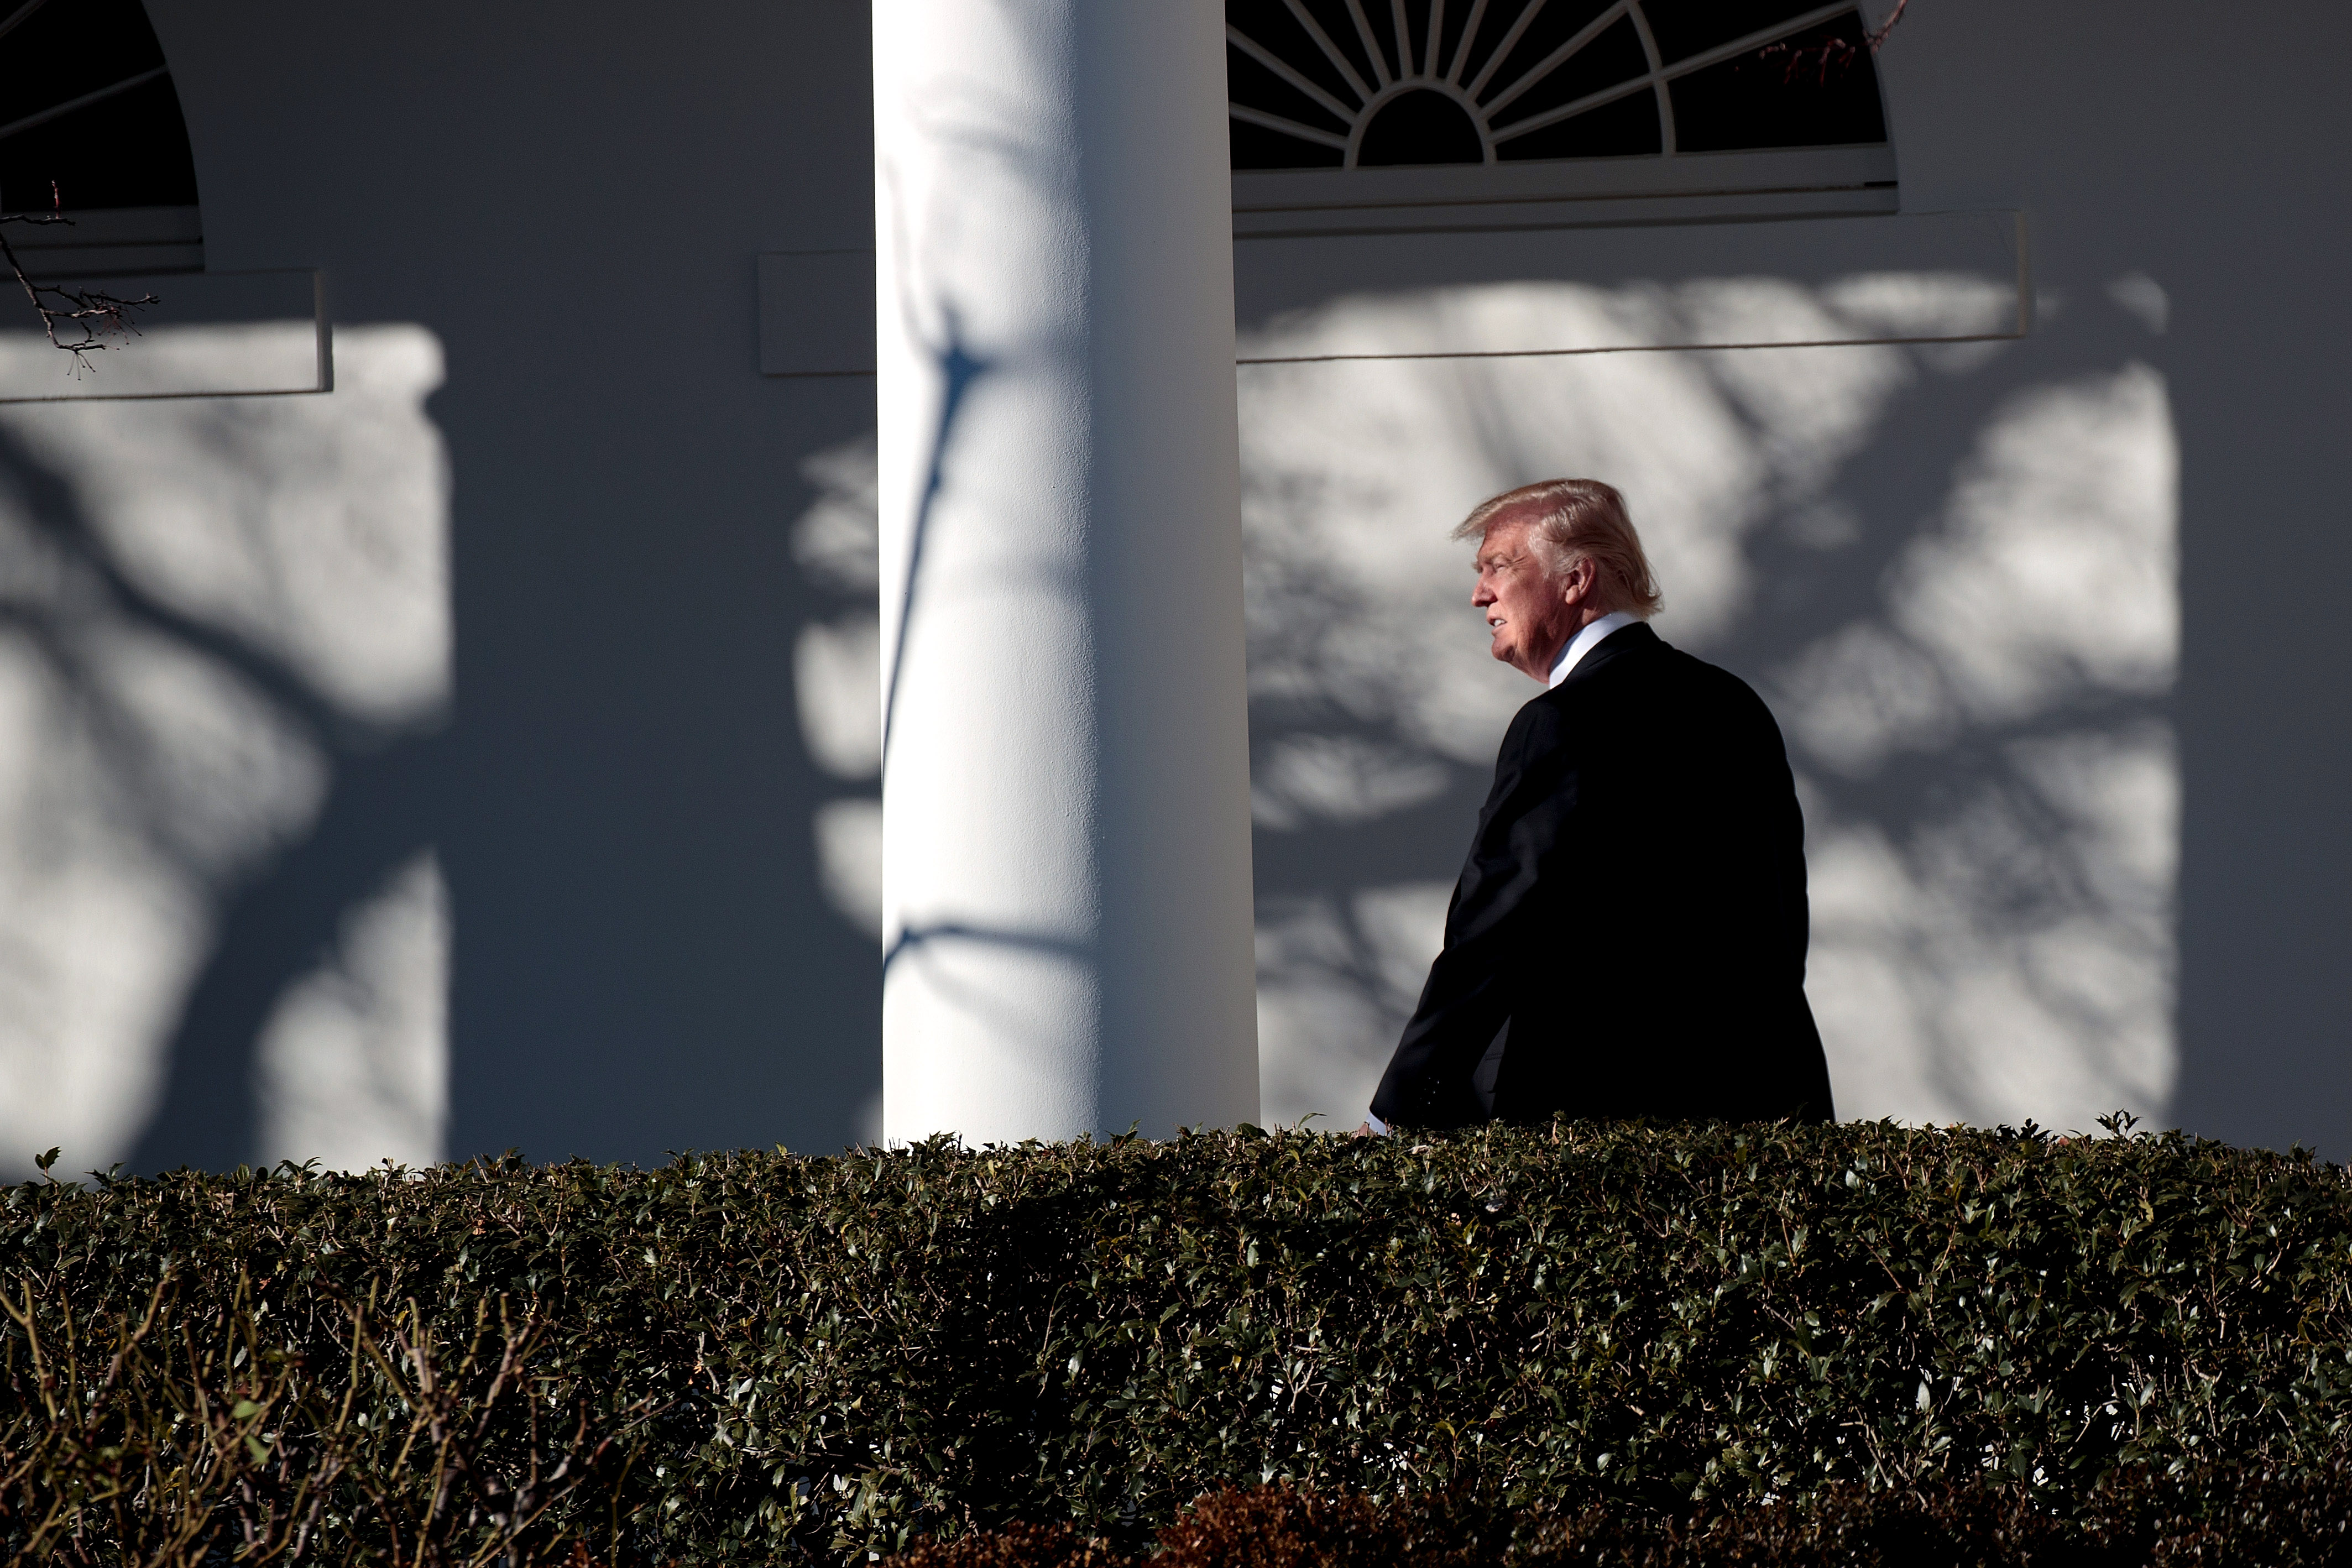 President Trump returns to the White House